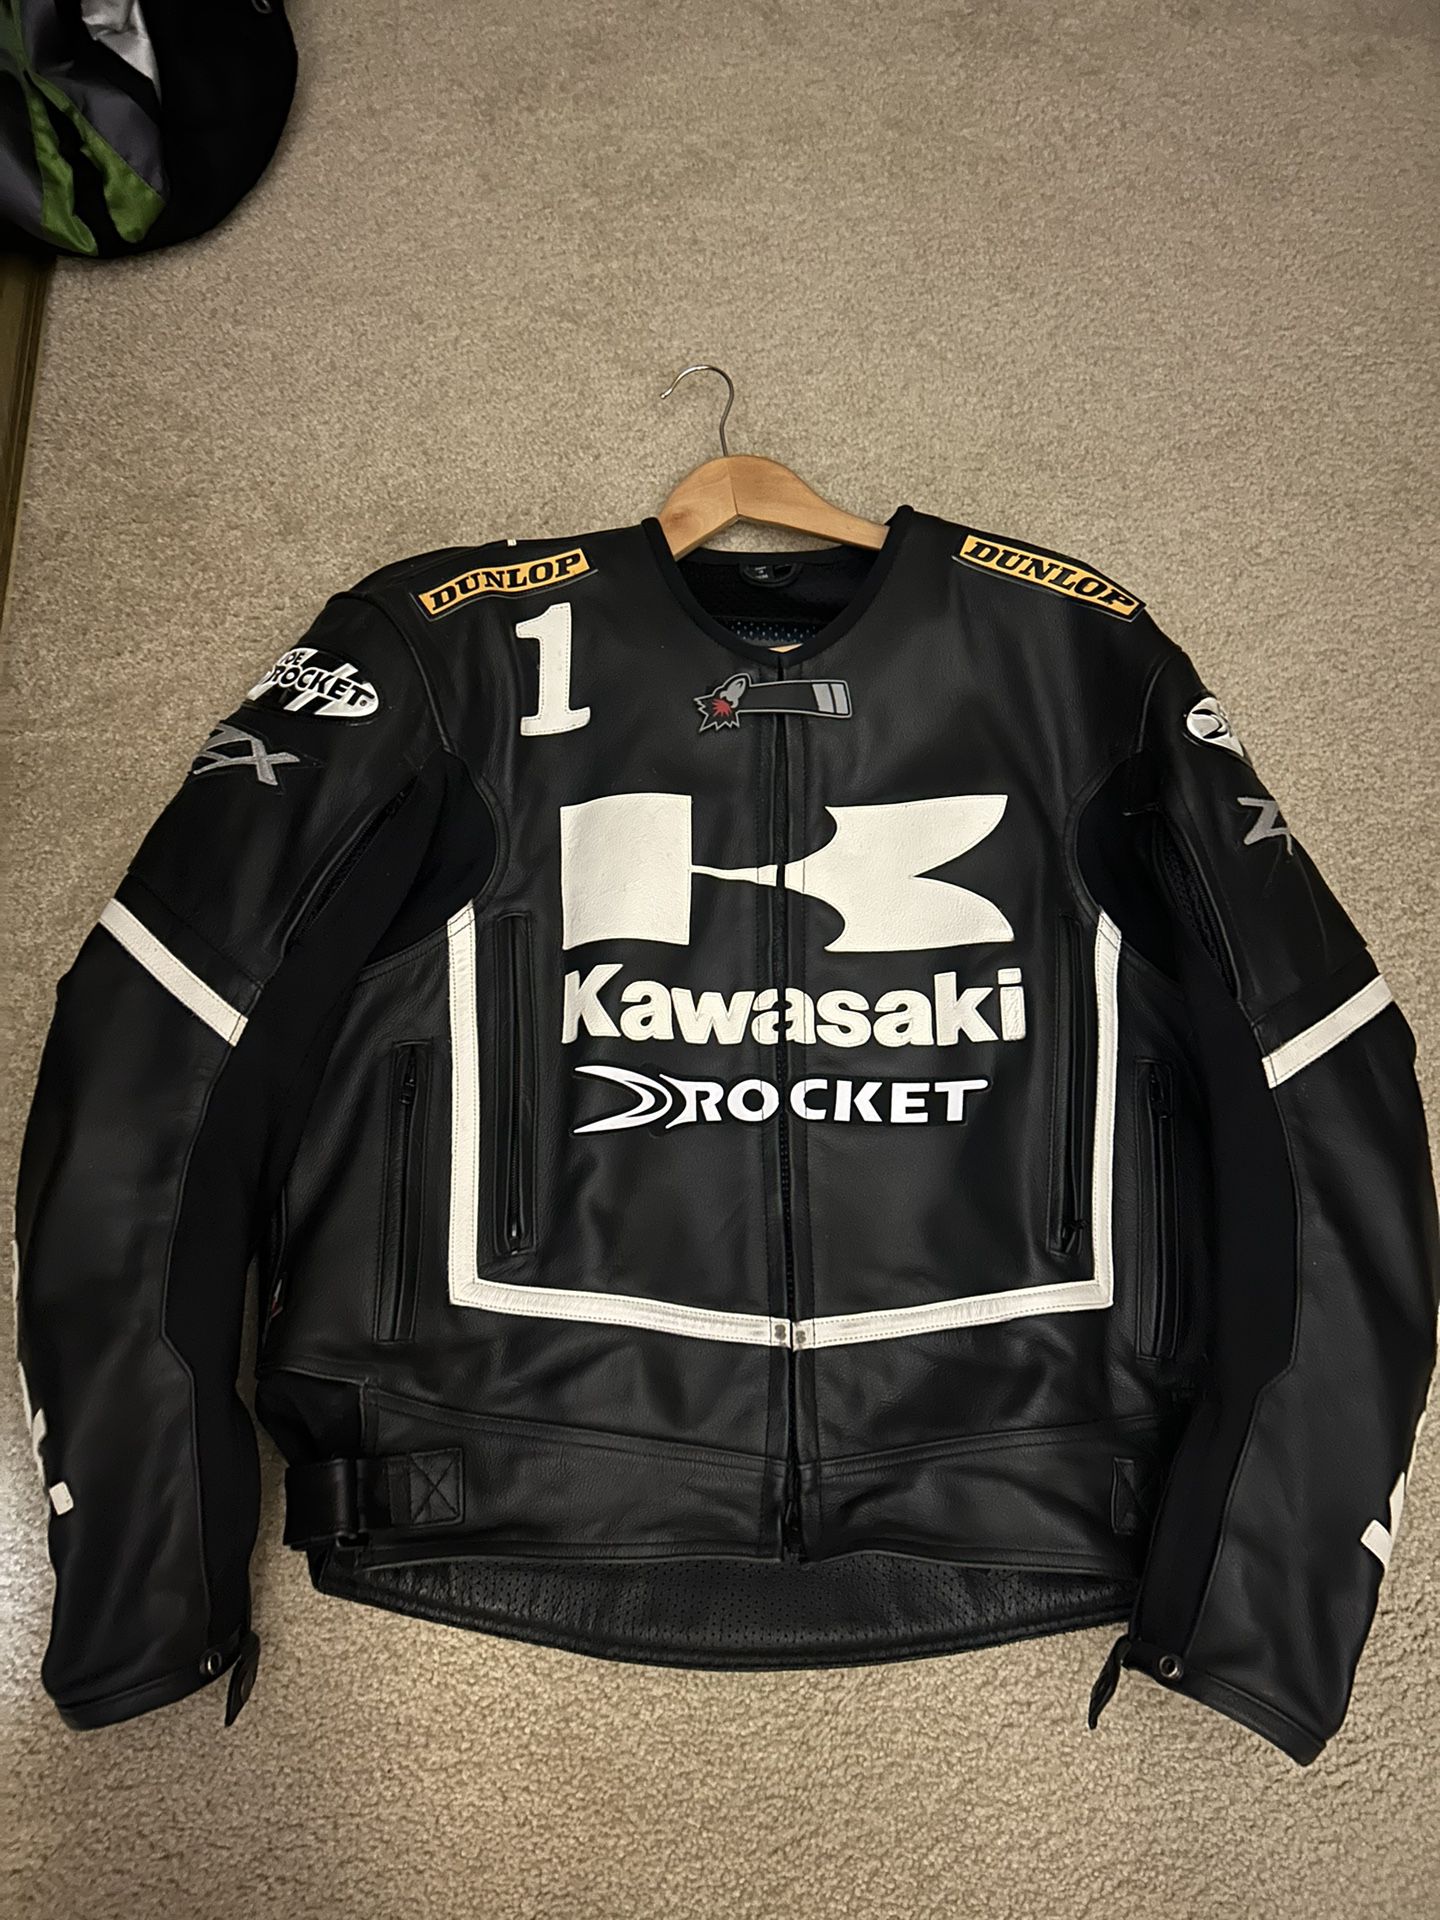 Kawasaki Leather Motorcycle Jacket 44R Like New